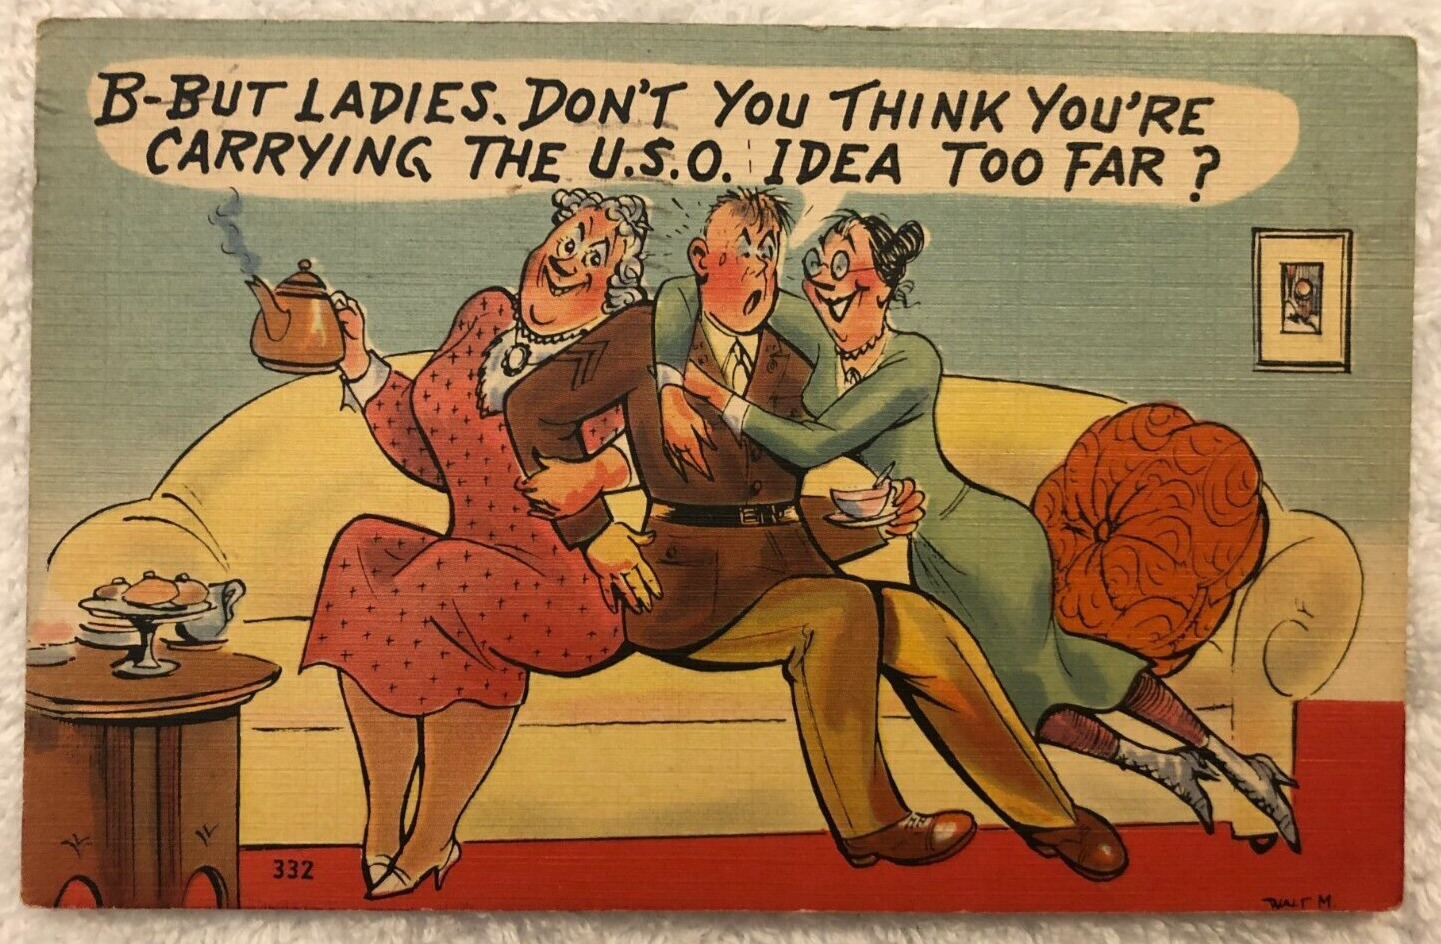 Post Card WSWII era Military Humor, USO Idea too Far? Army Life Comics 1943